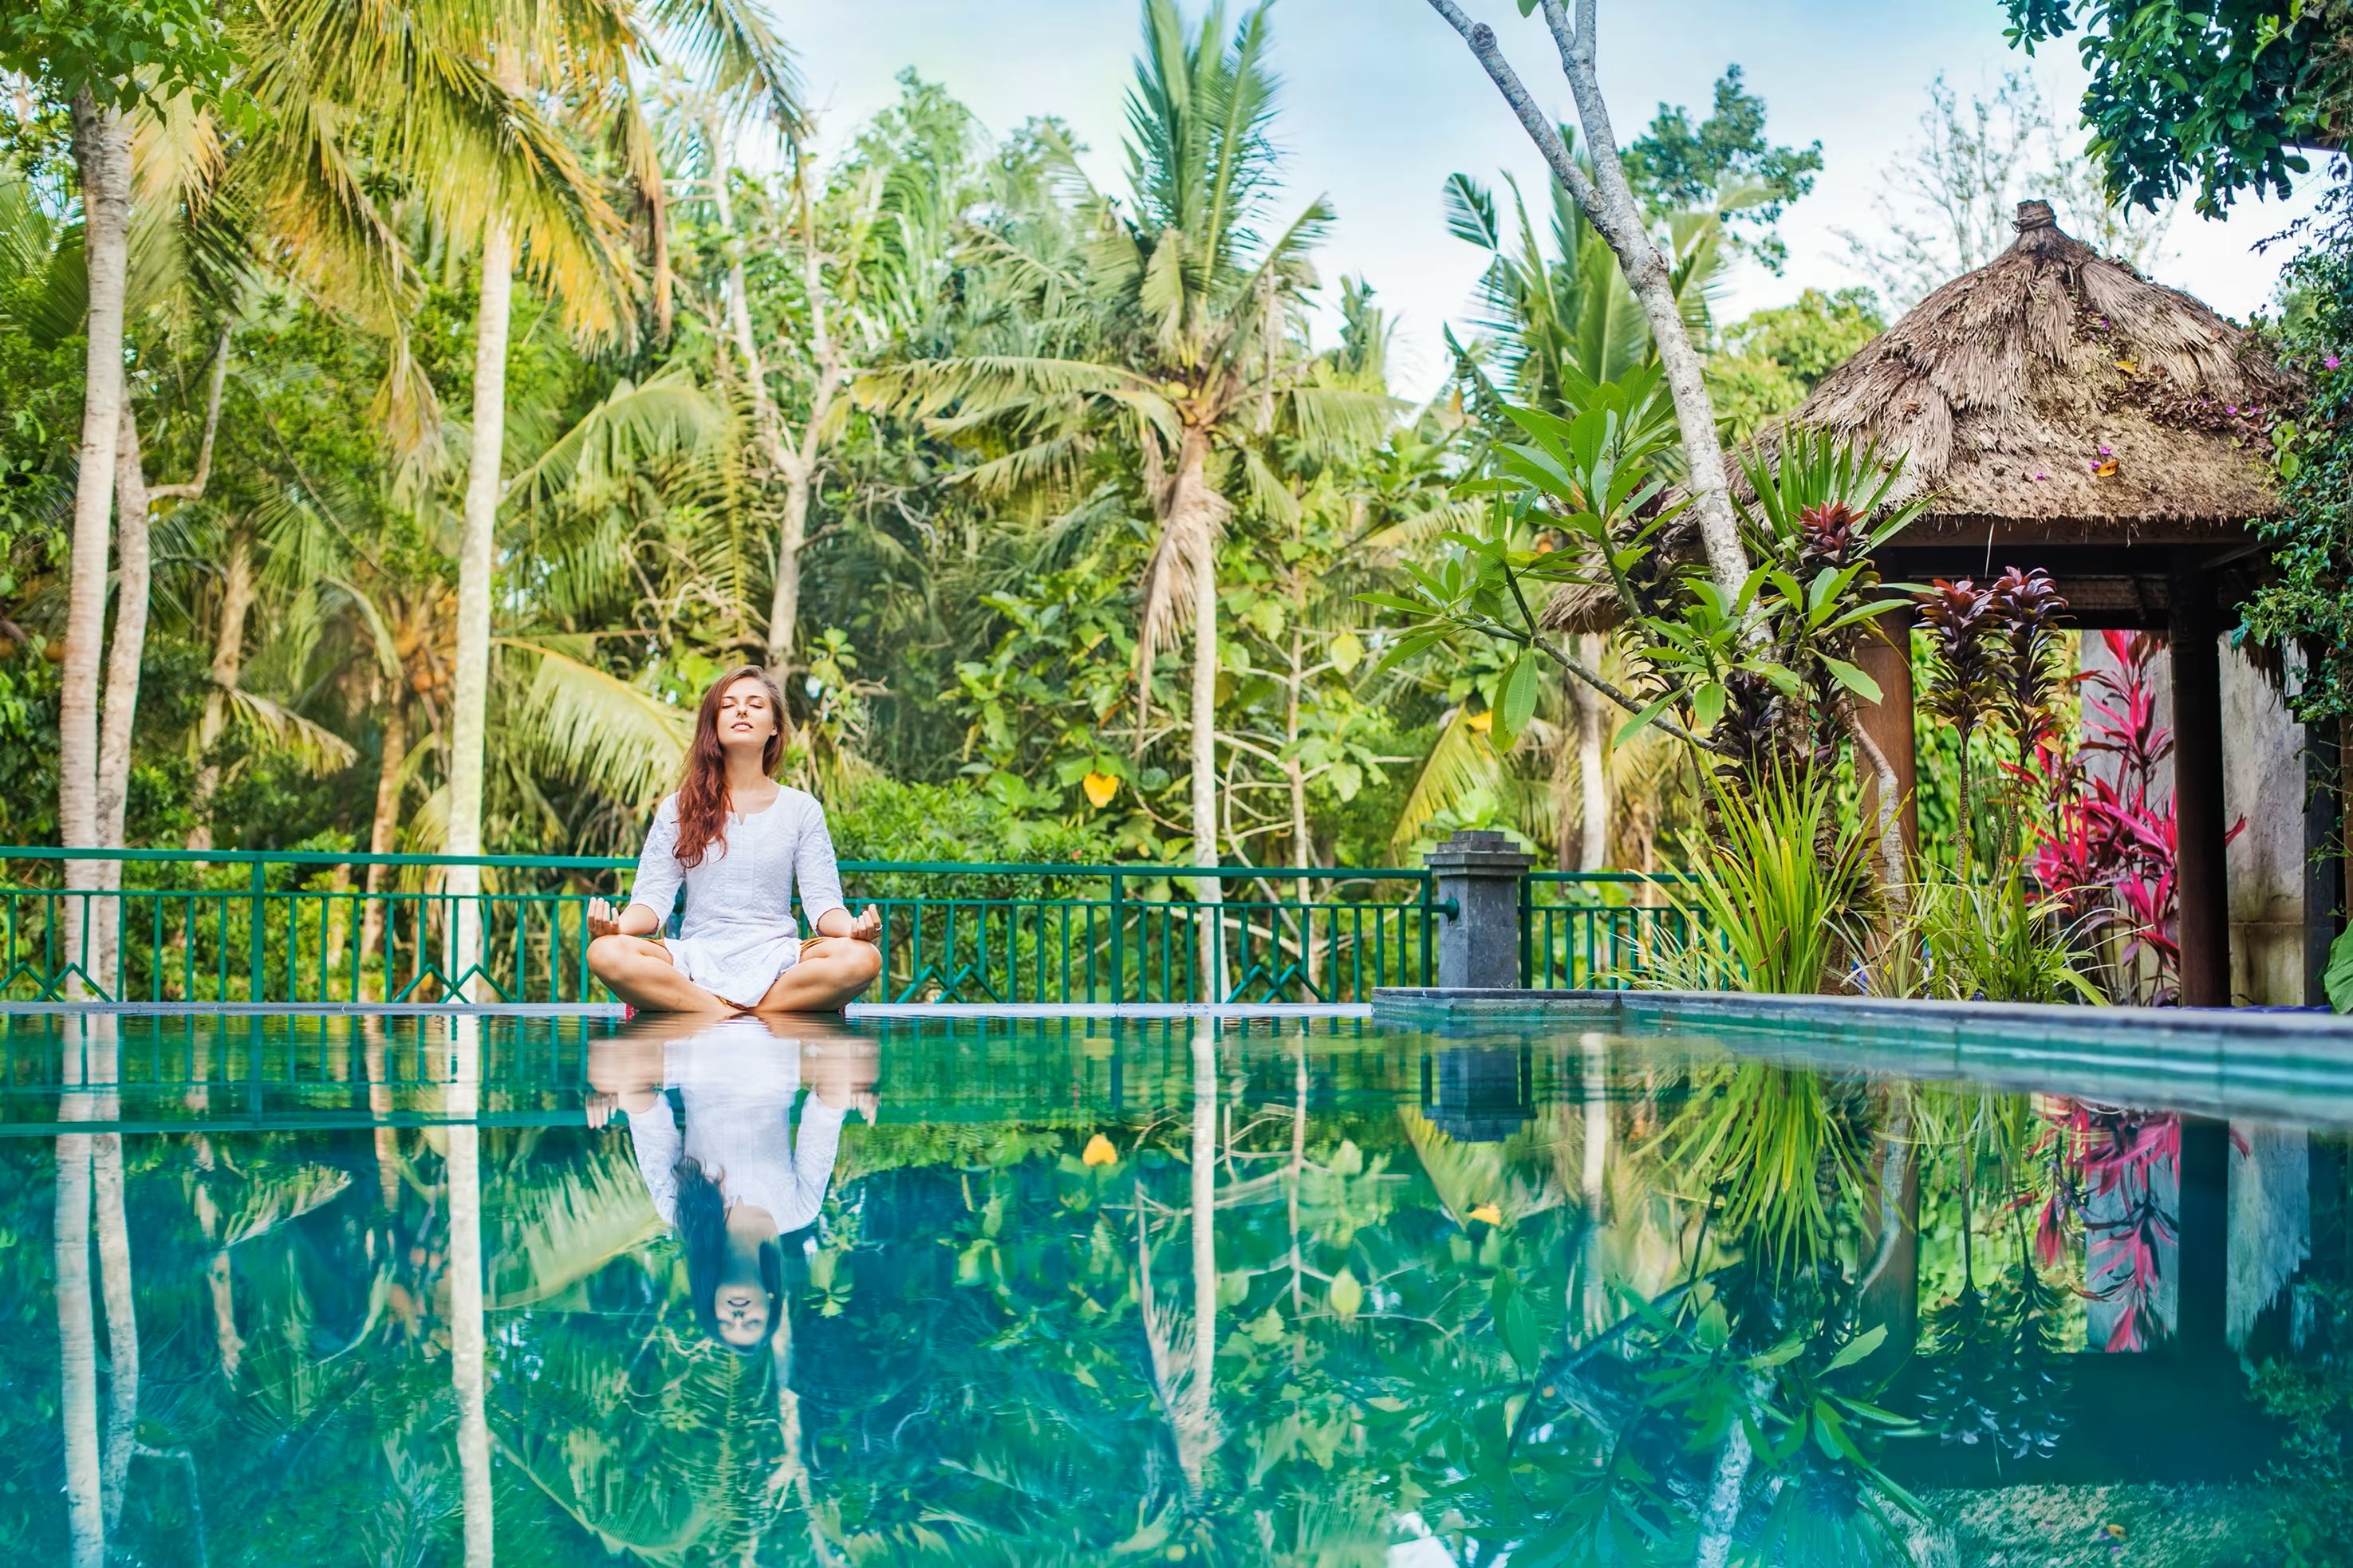 Woman in yoga pose at pool in jungle